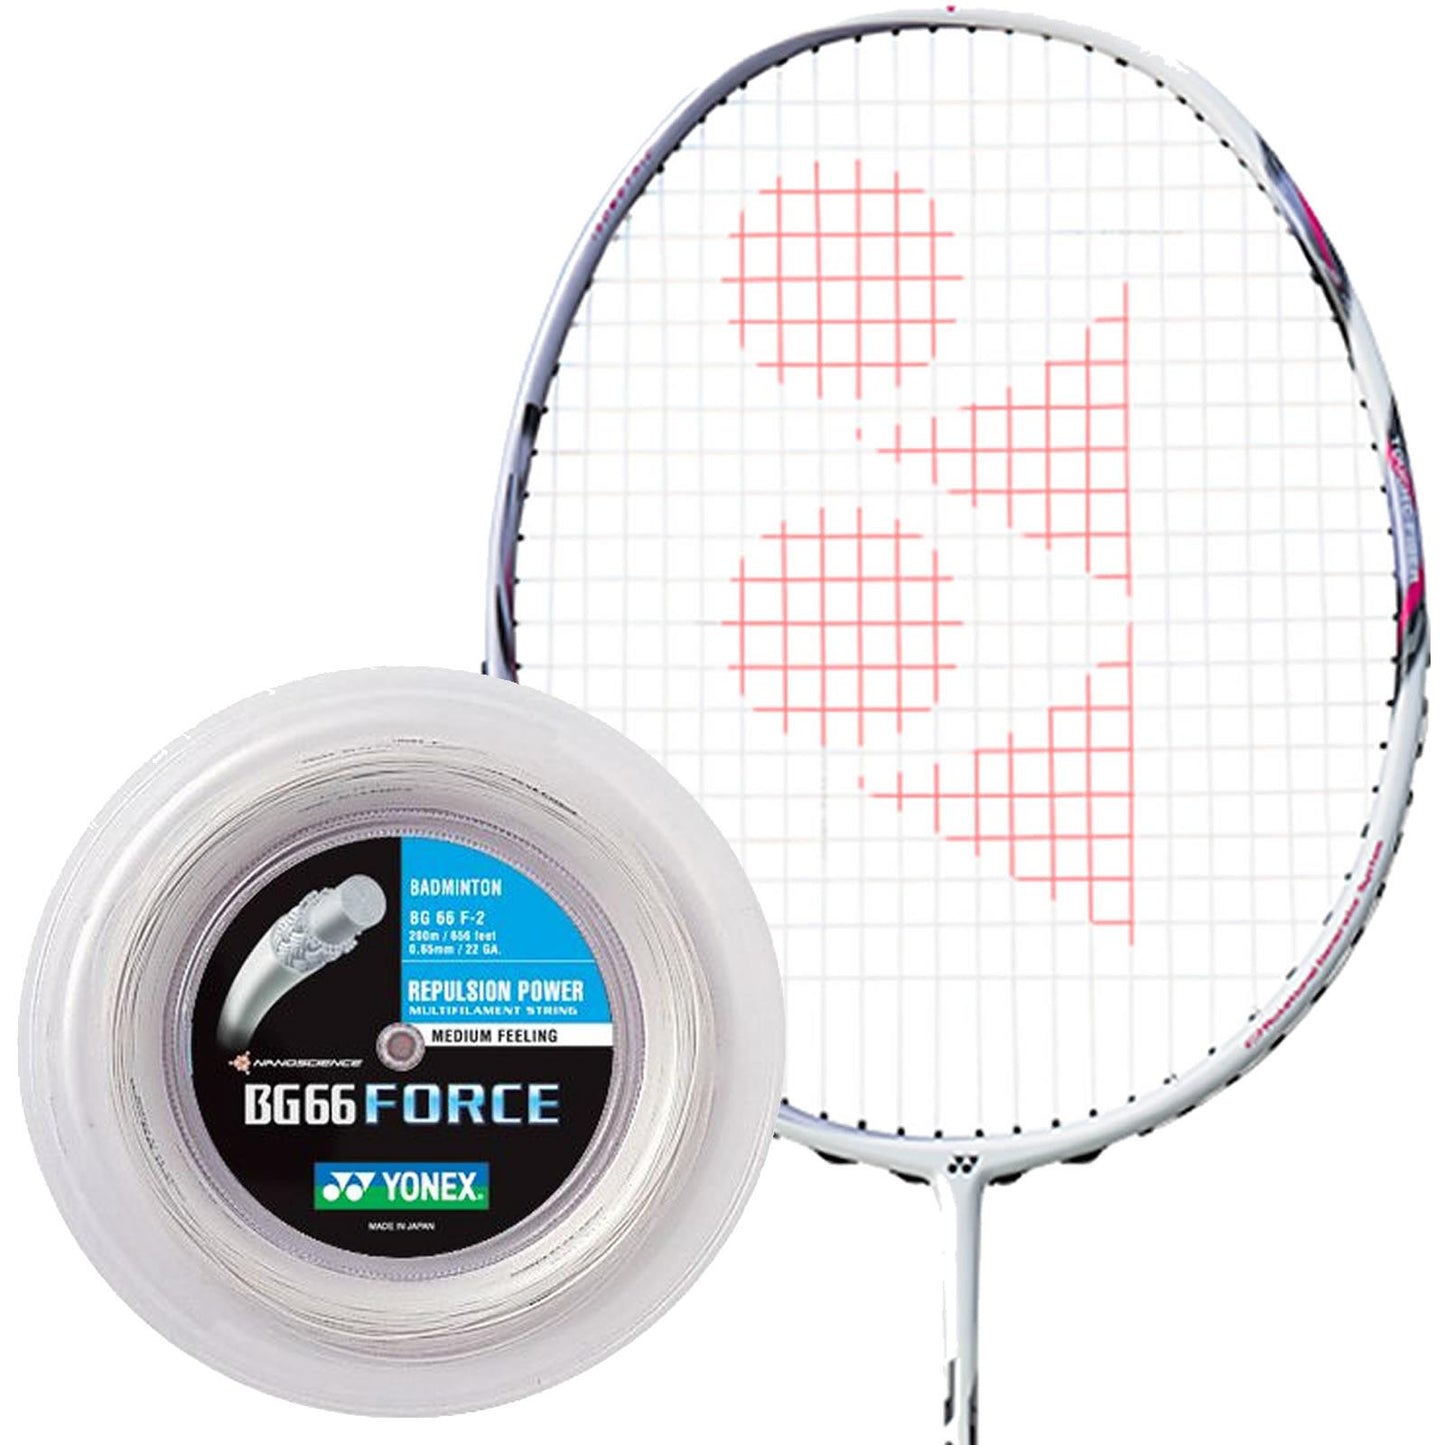 Yonex BG 66 Force Badminton String White - 0.65mm 200m Reel